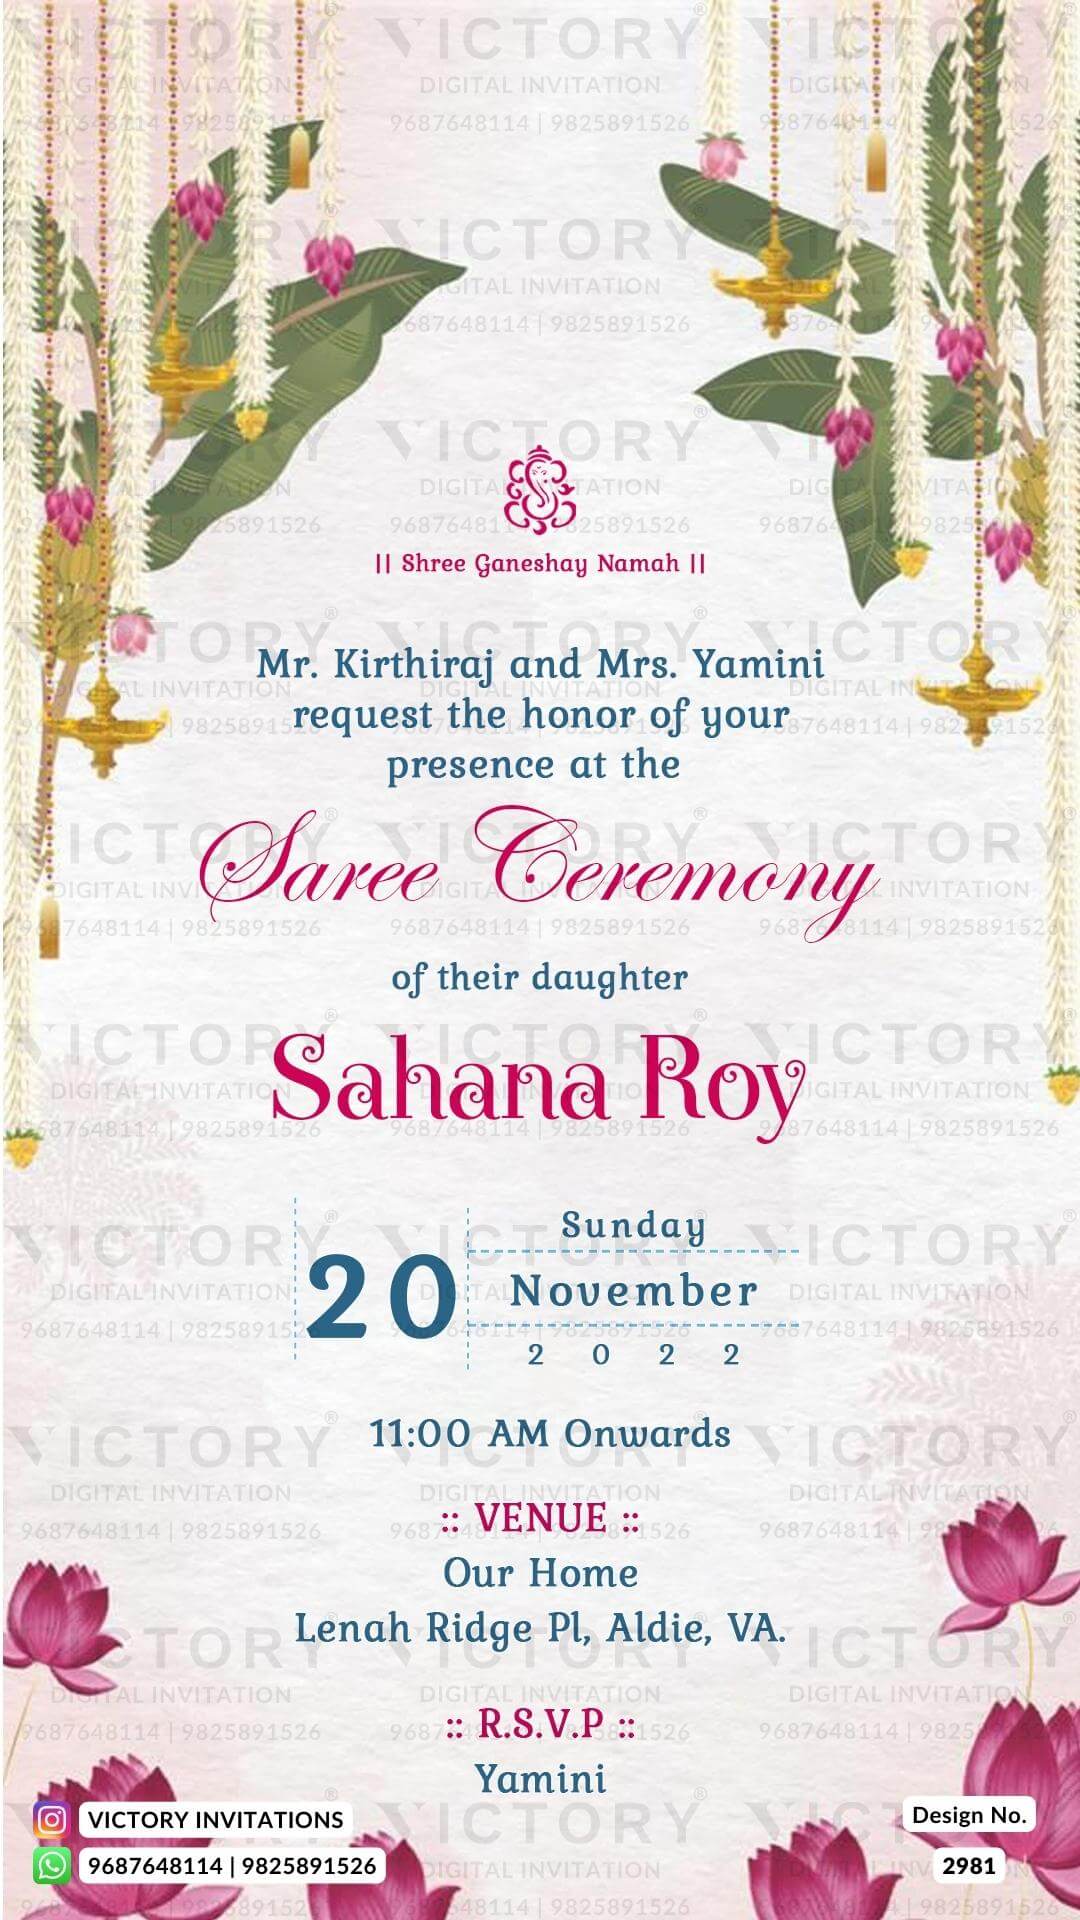 Half Saree Ceremony digital invitation card design no.2981